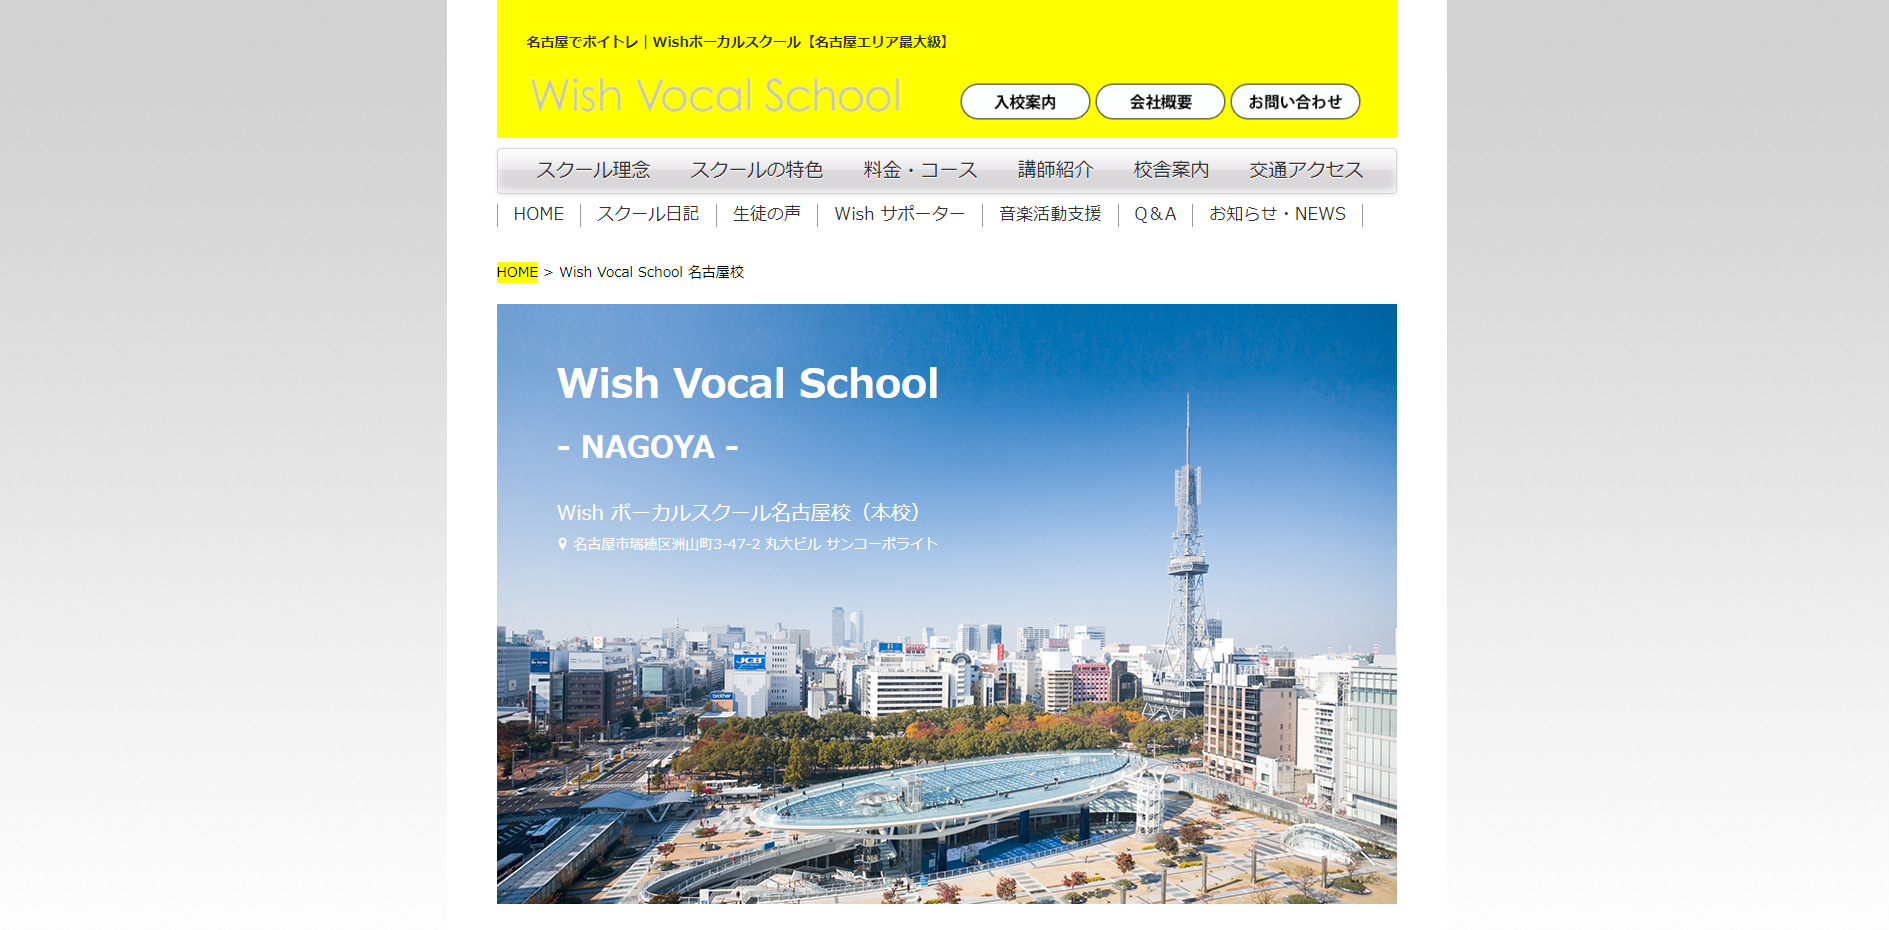 Wish Vocal School